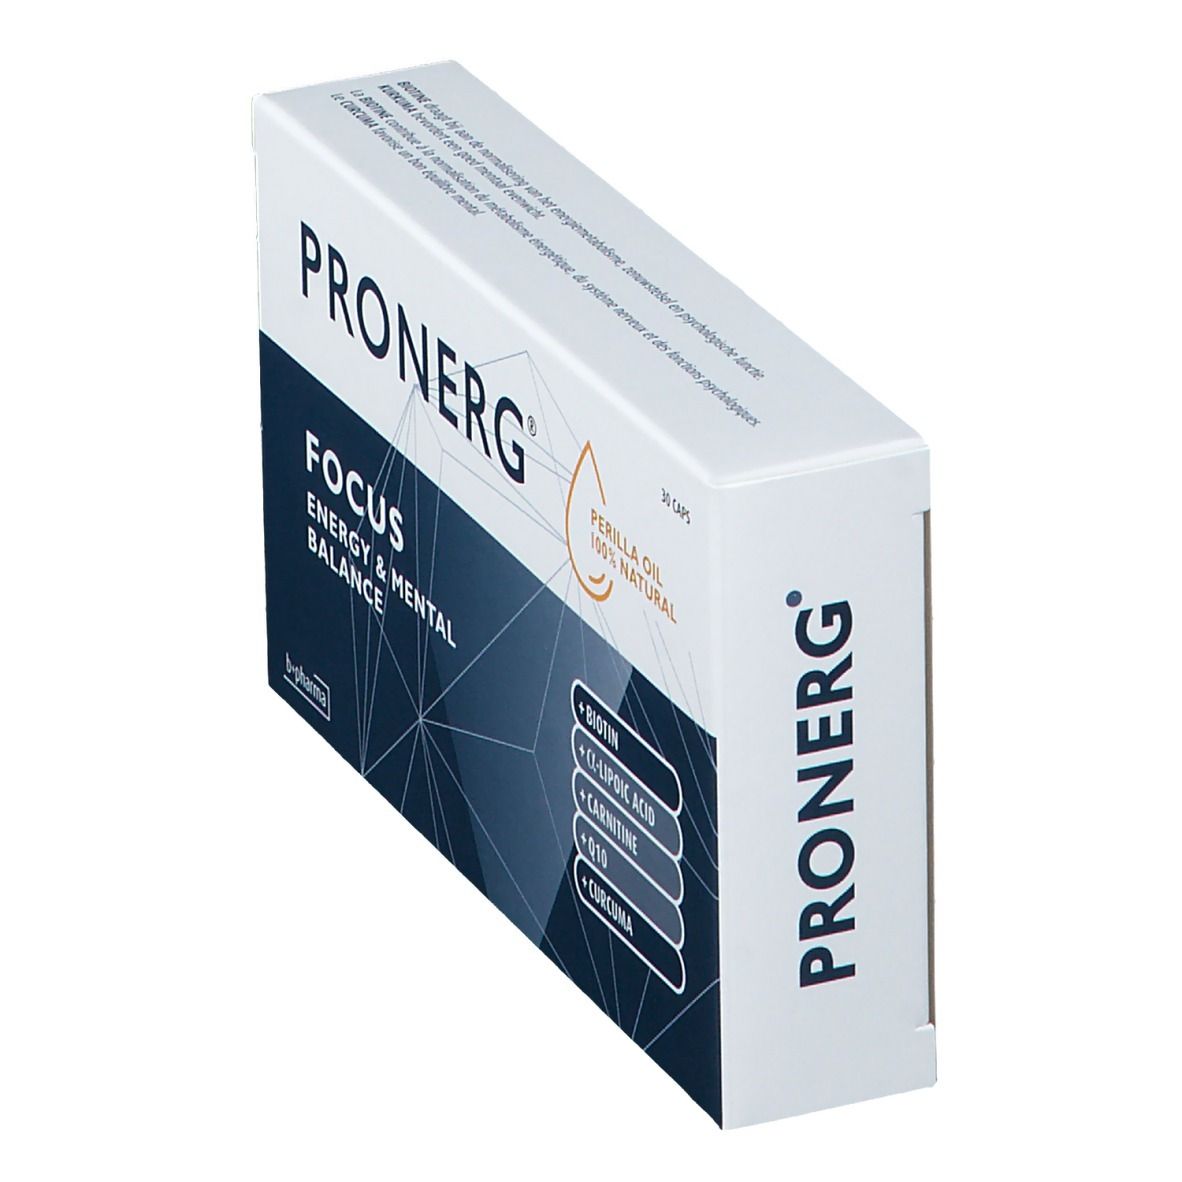 Pronerg B+Pharma